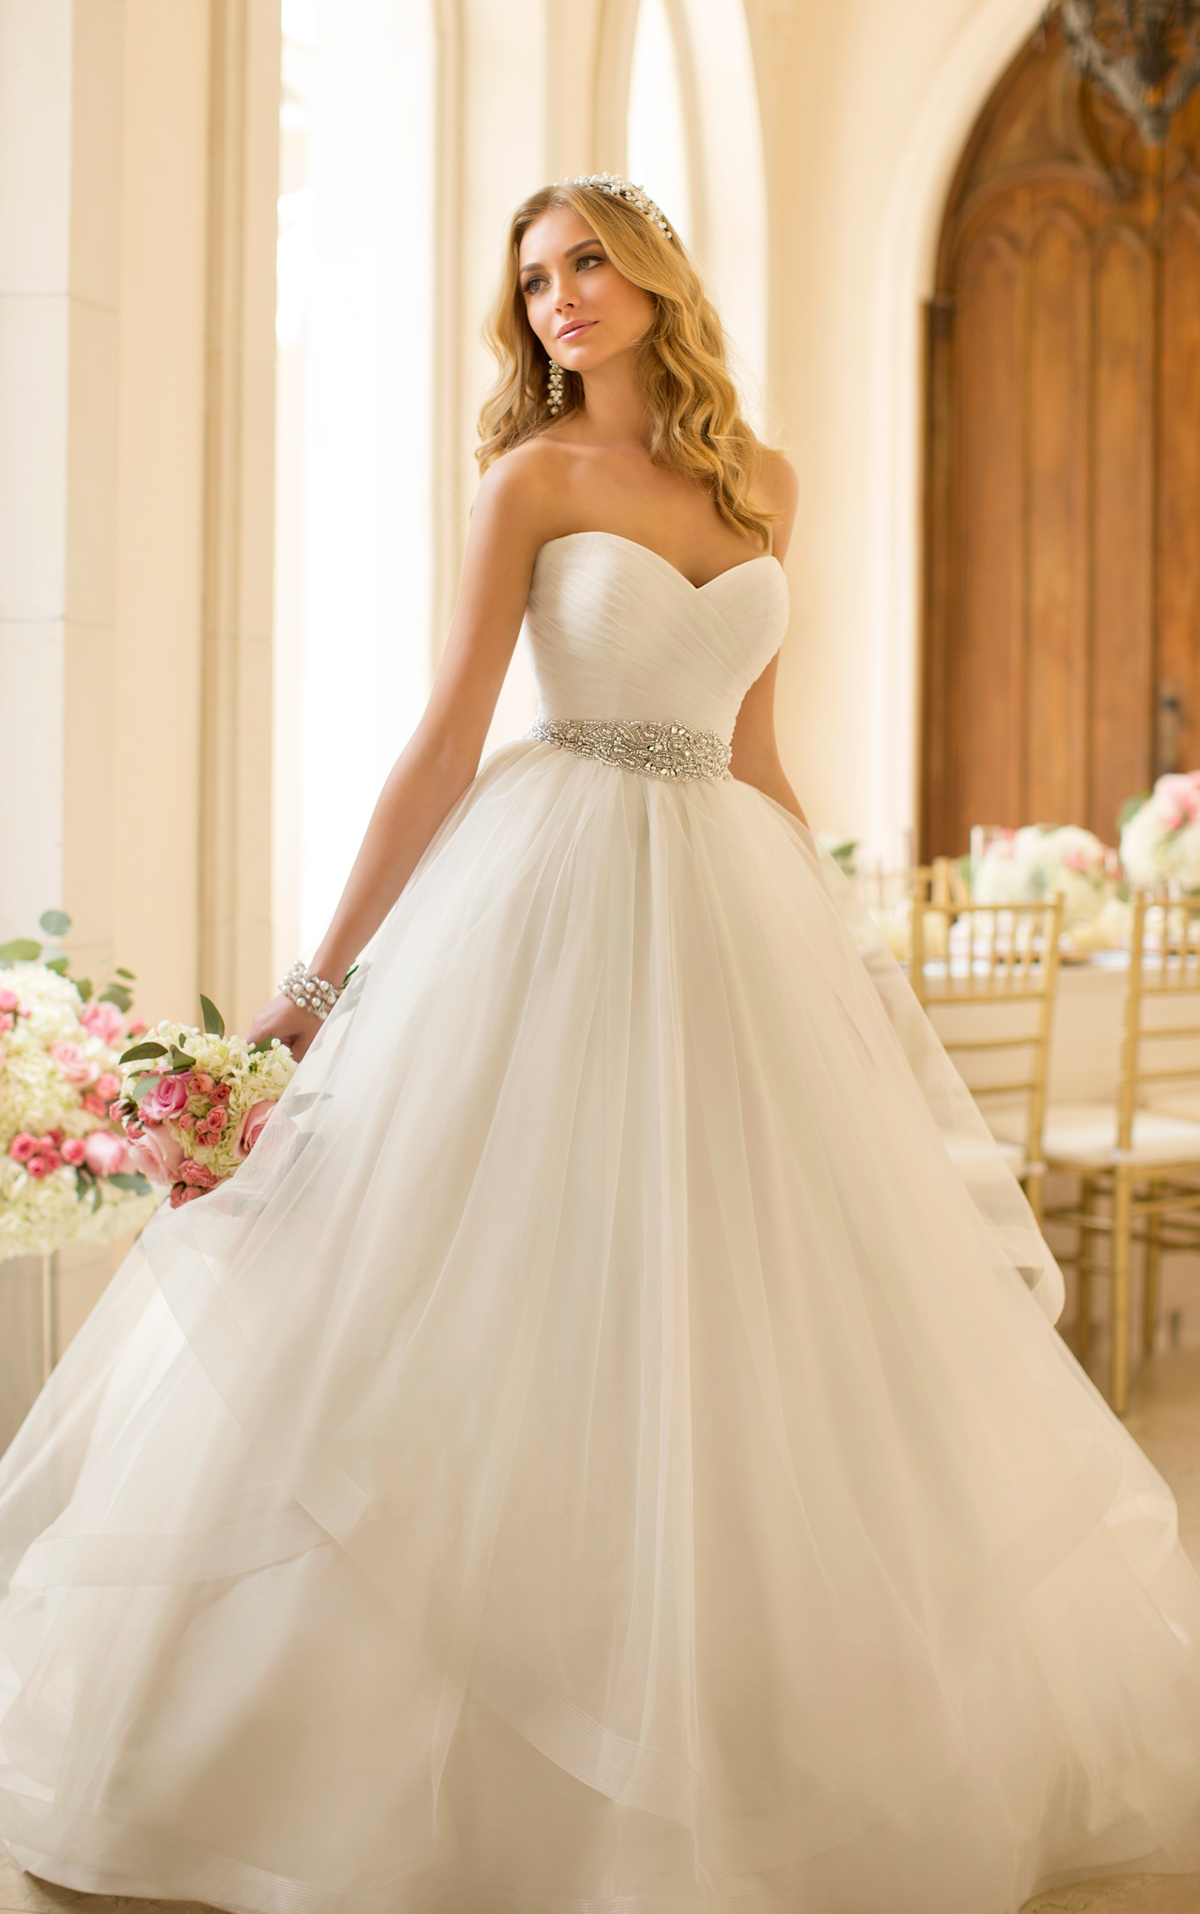 Amazing Bride Dresses